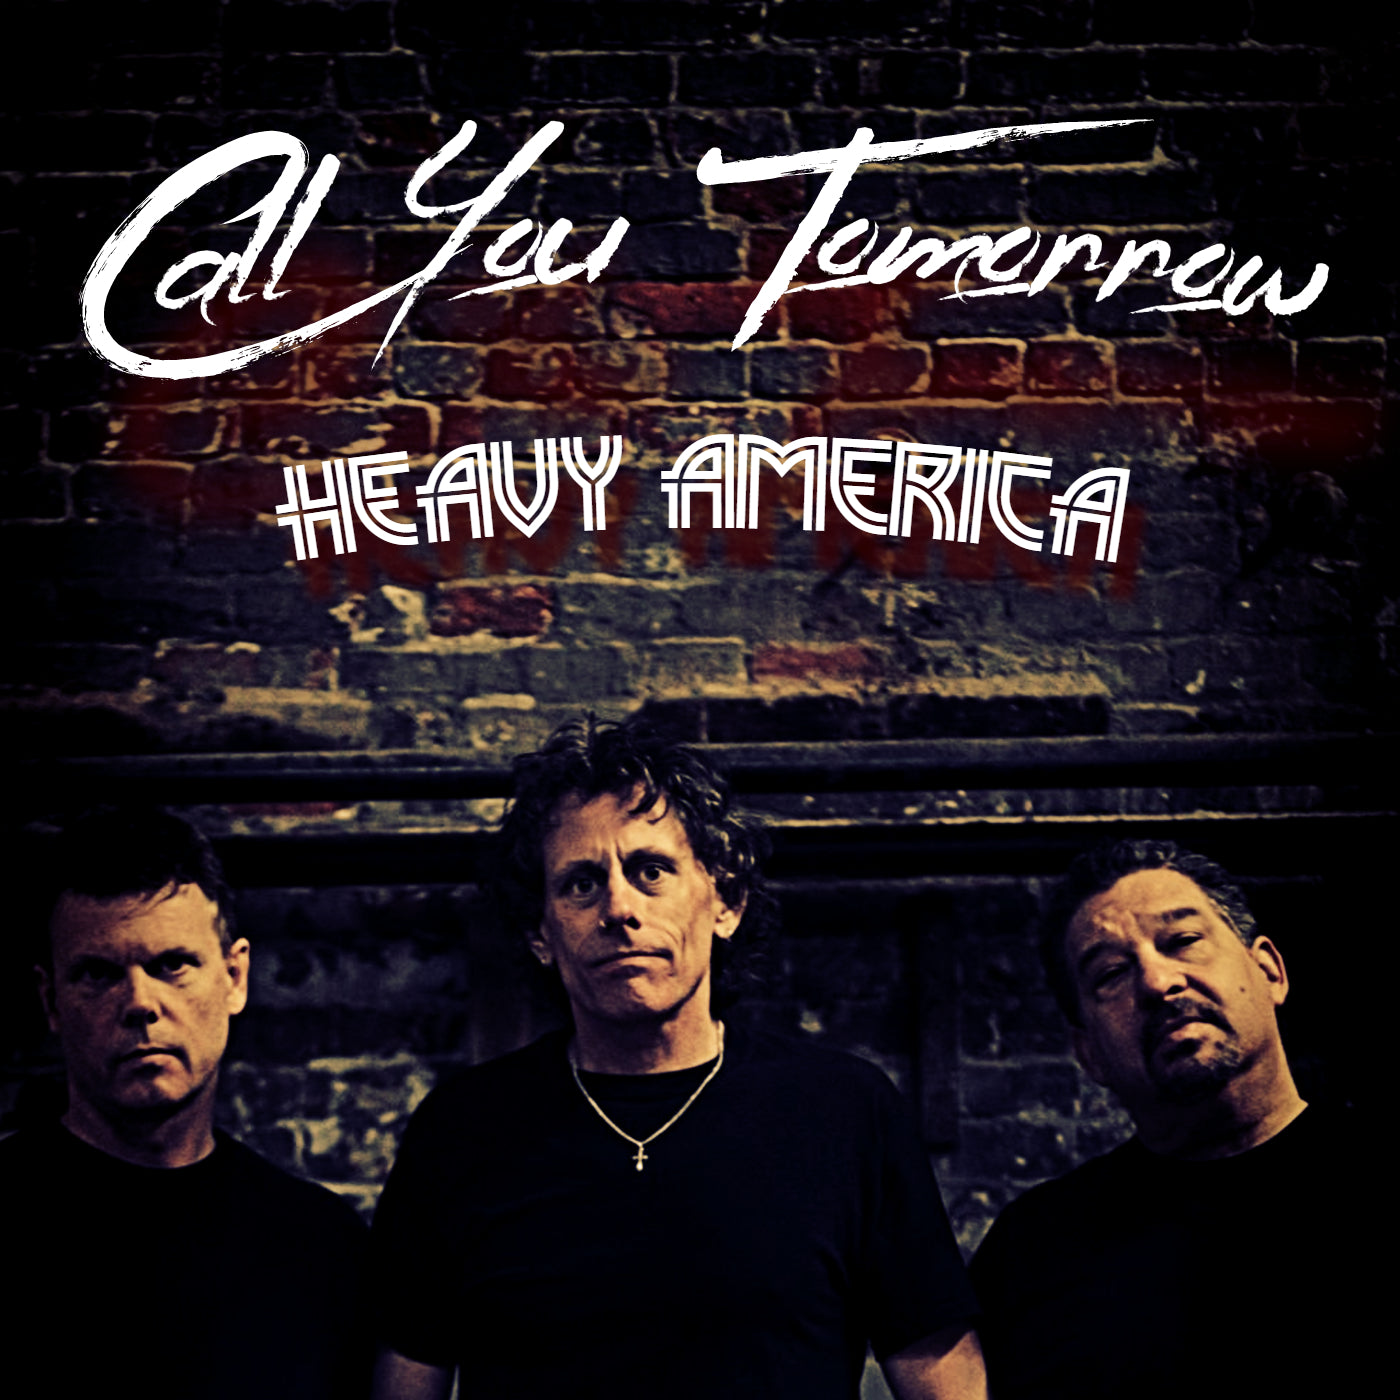 Heavy AmericA – ‘Call You Tomorrow’